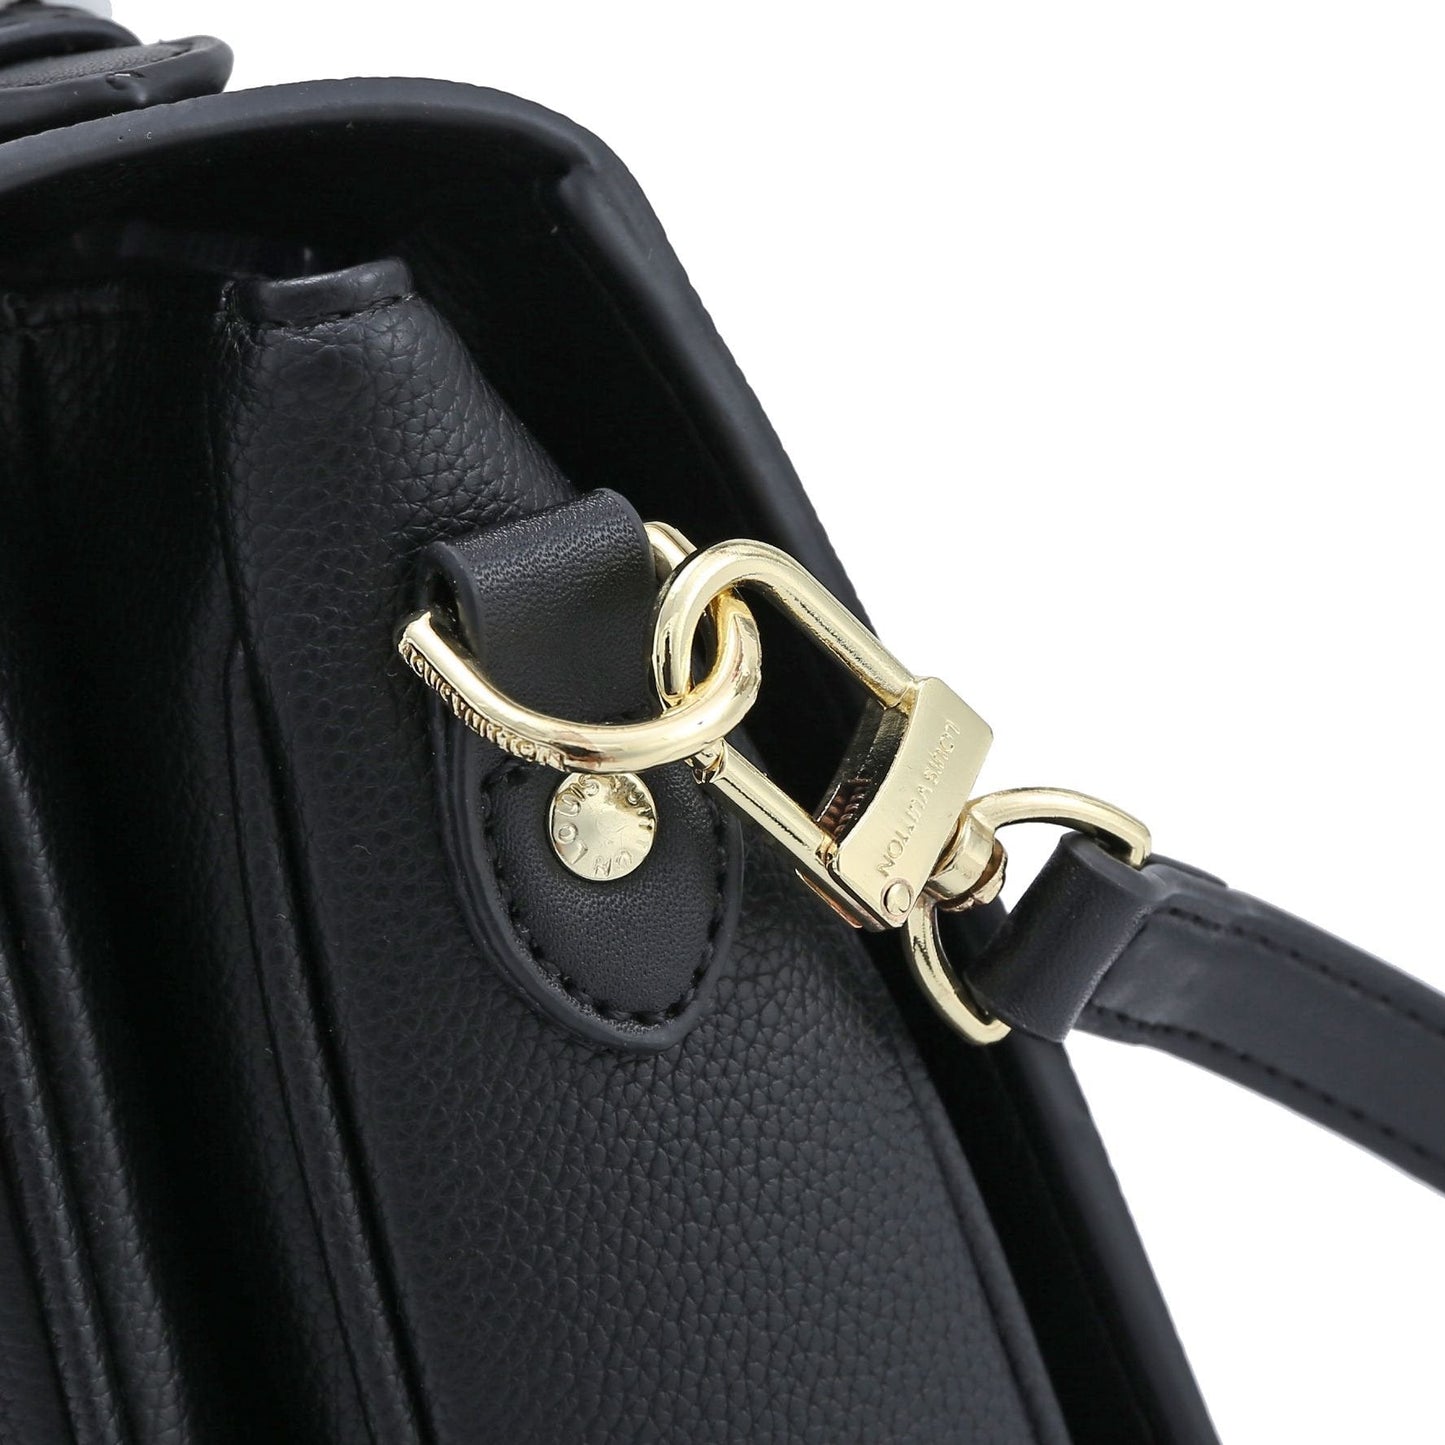 EI - Top Handbags LUV 041